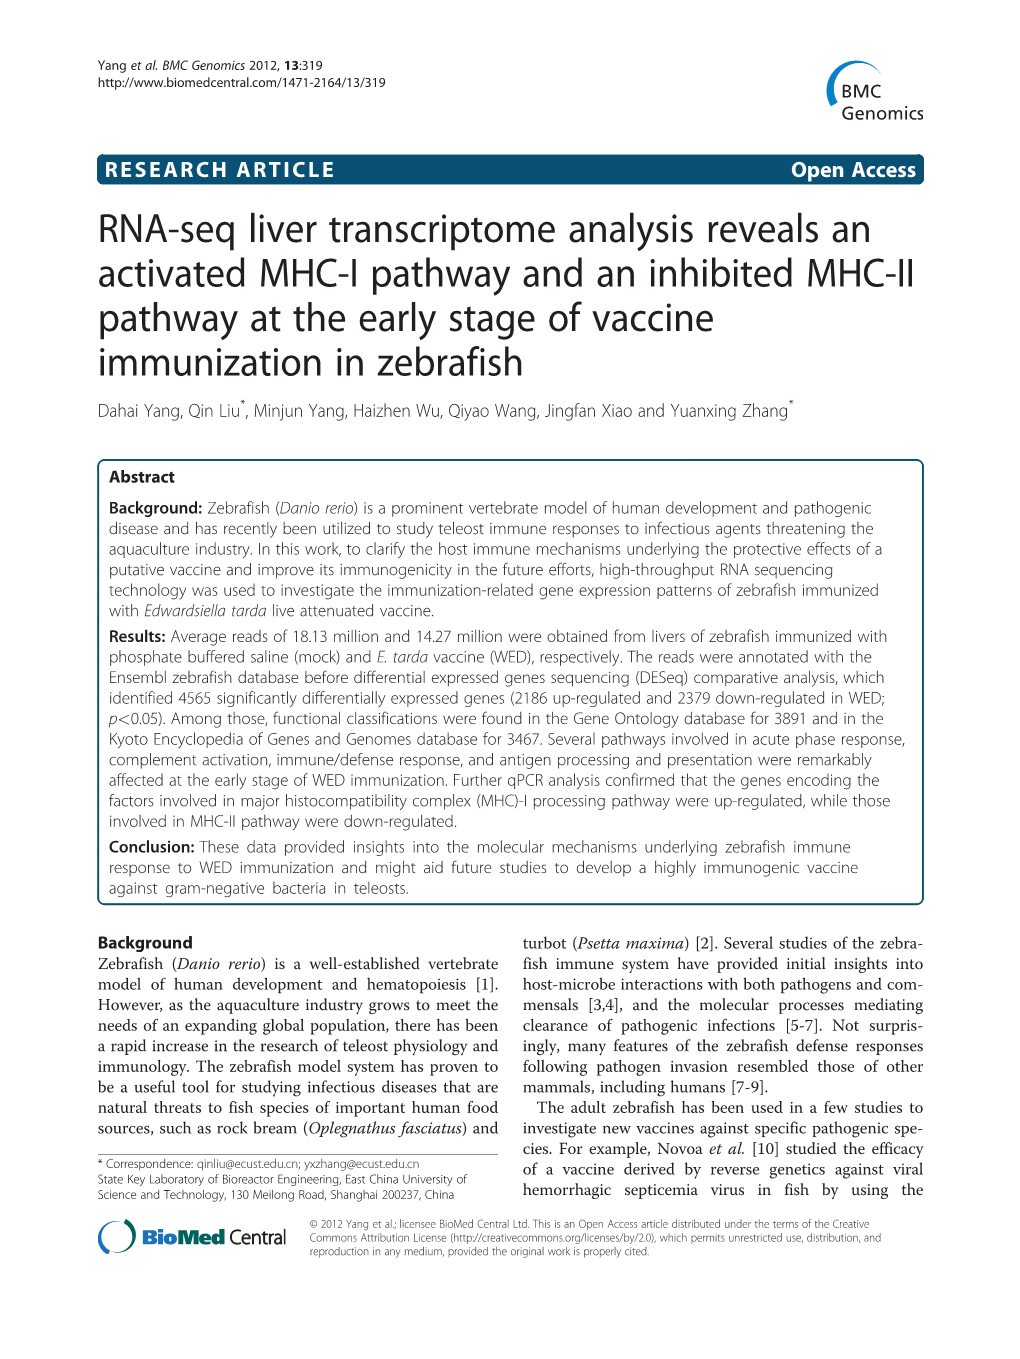 RNA-Seq Liver Transcriptome Analysis Reveals an Activated MHC-I